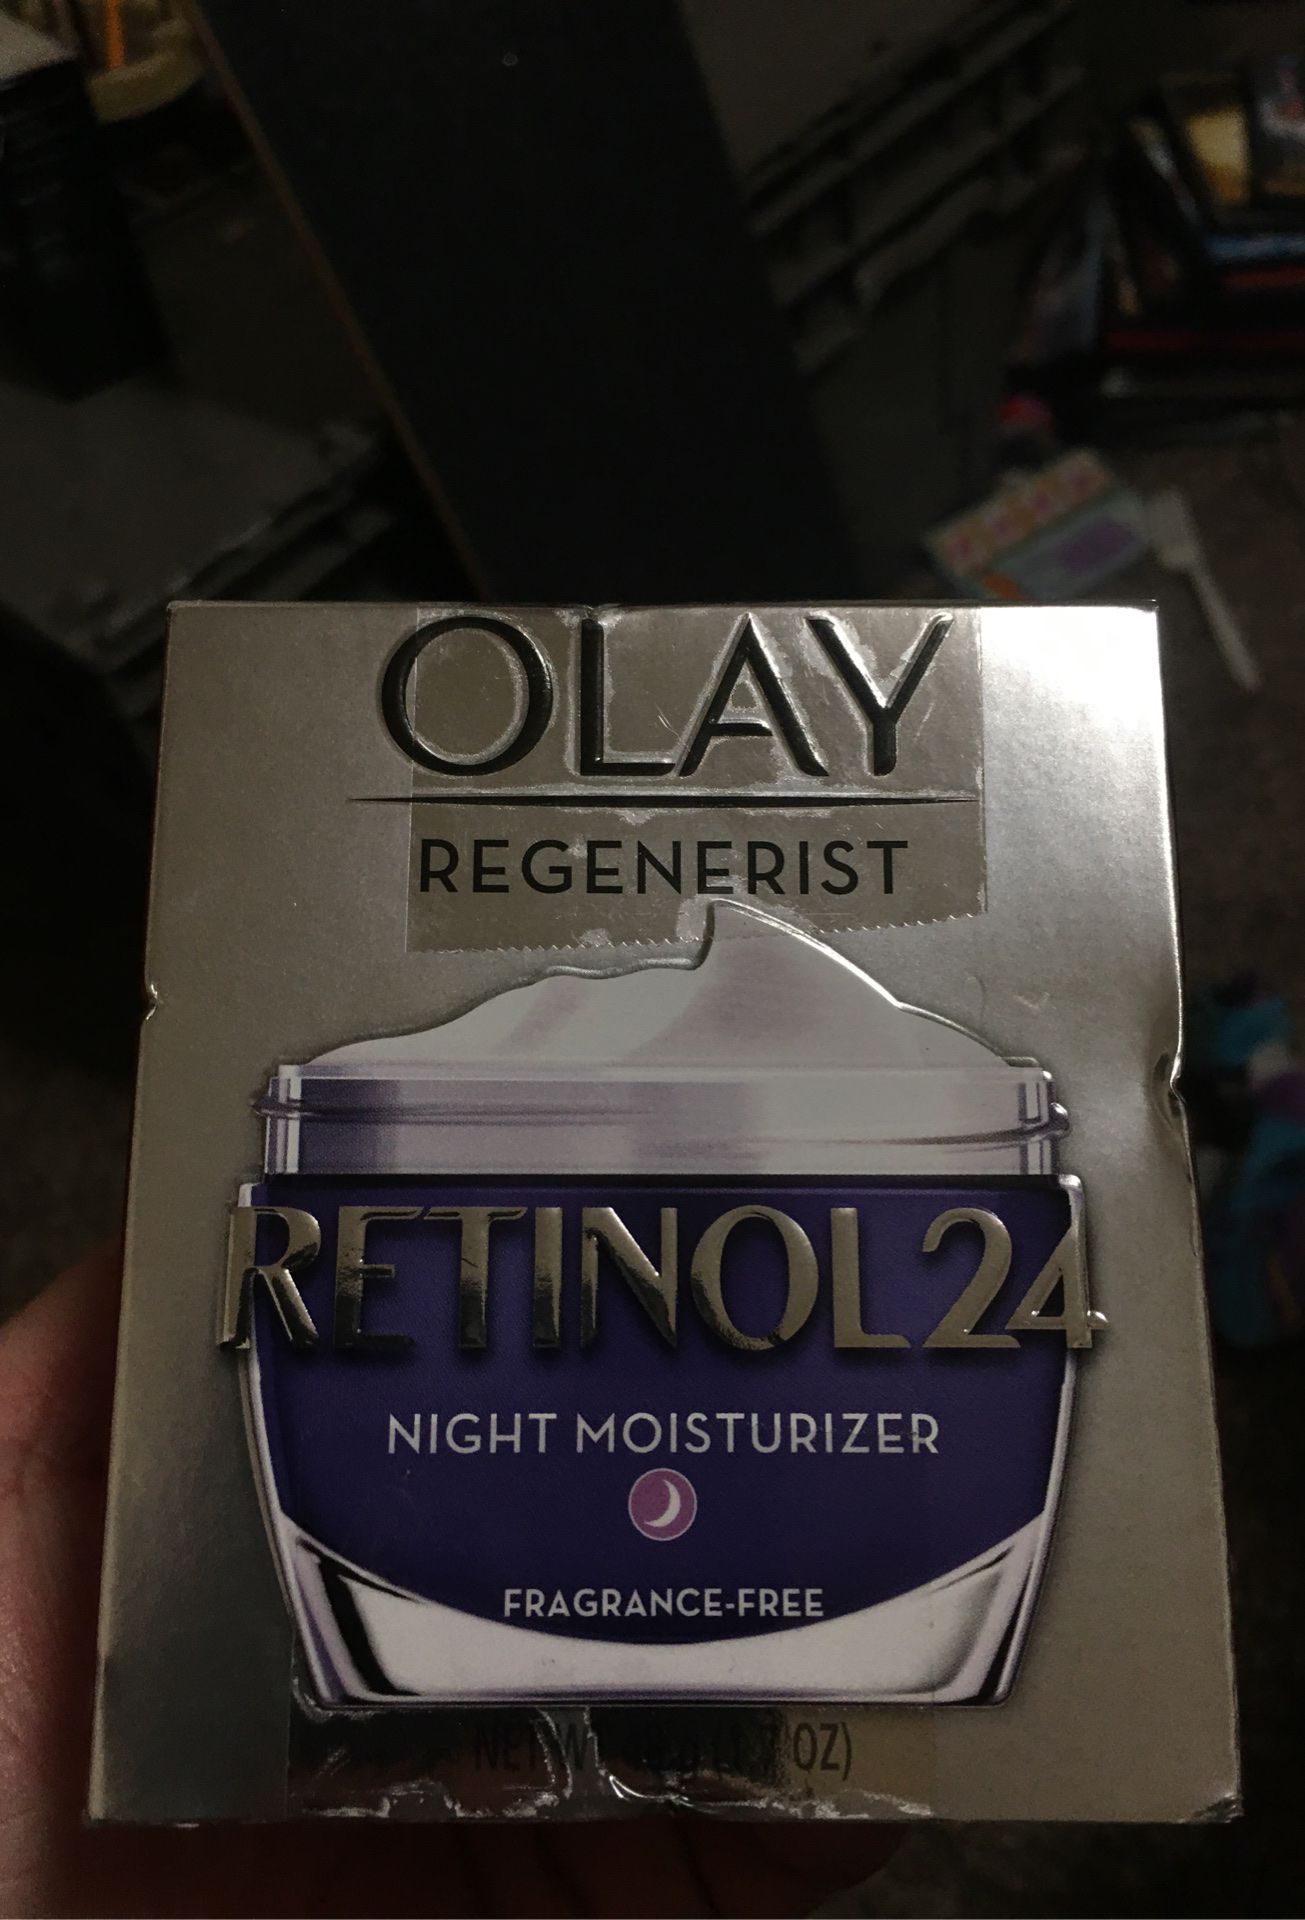 Olay Regenerist Retinol 24 Night Moisturizer